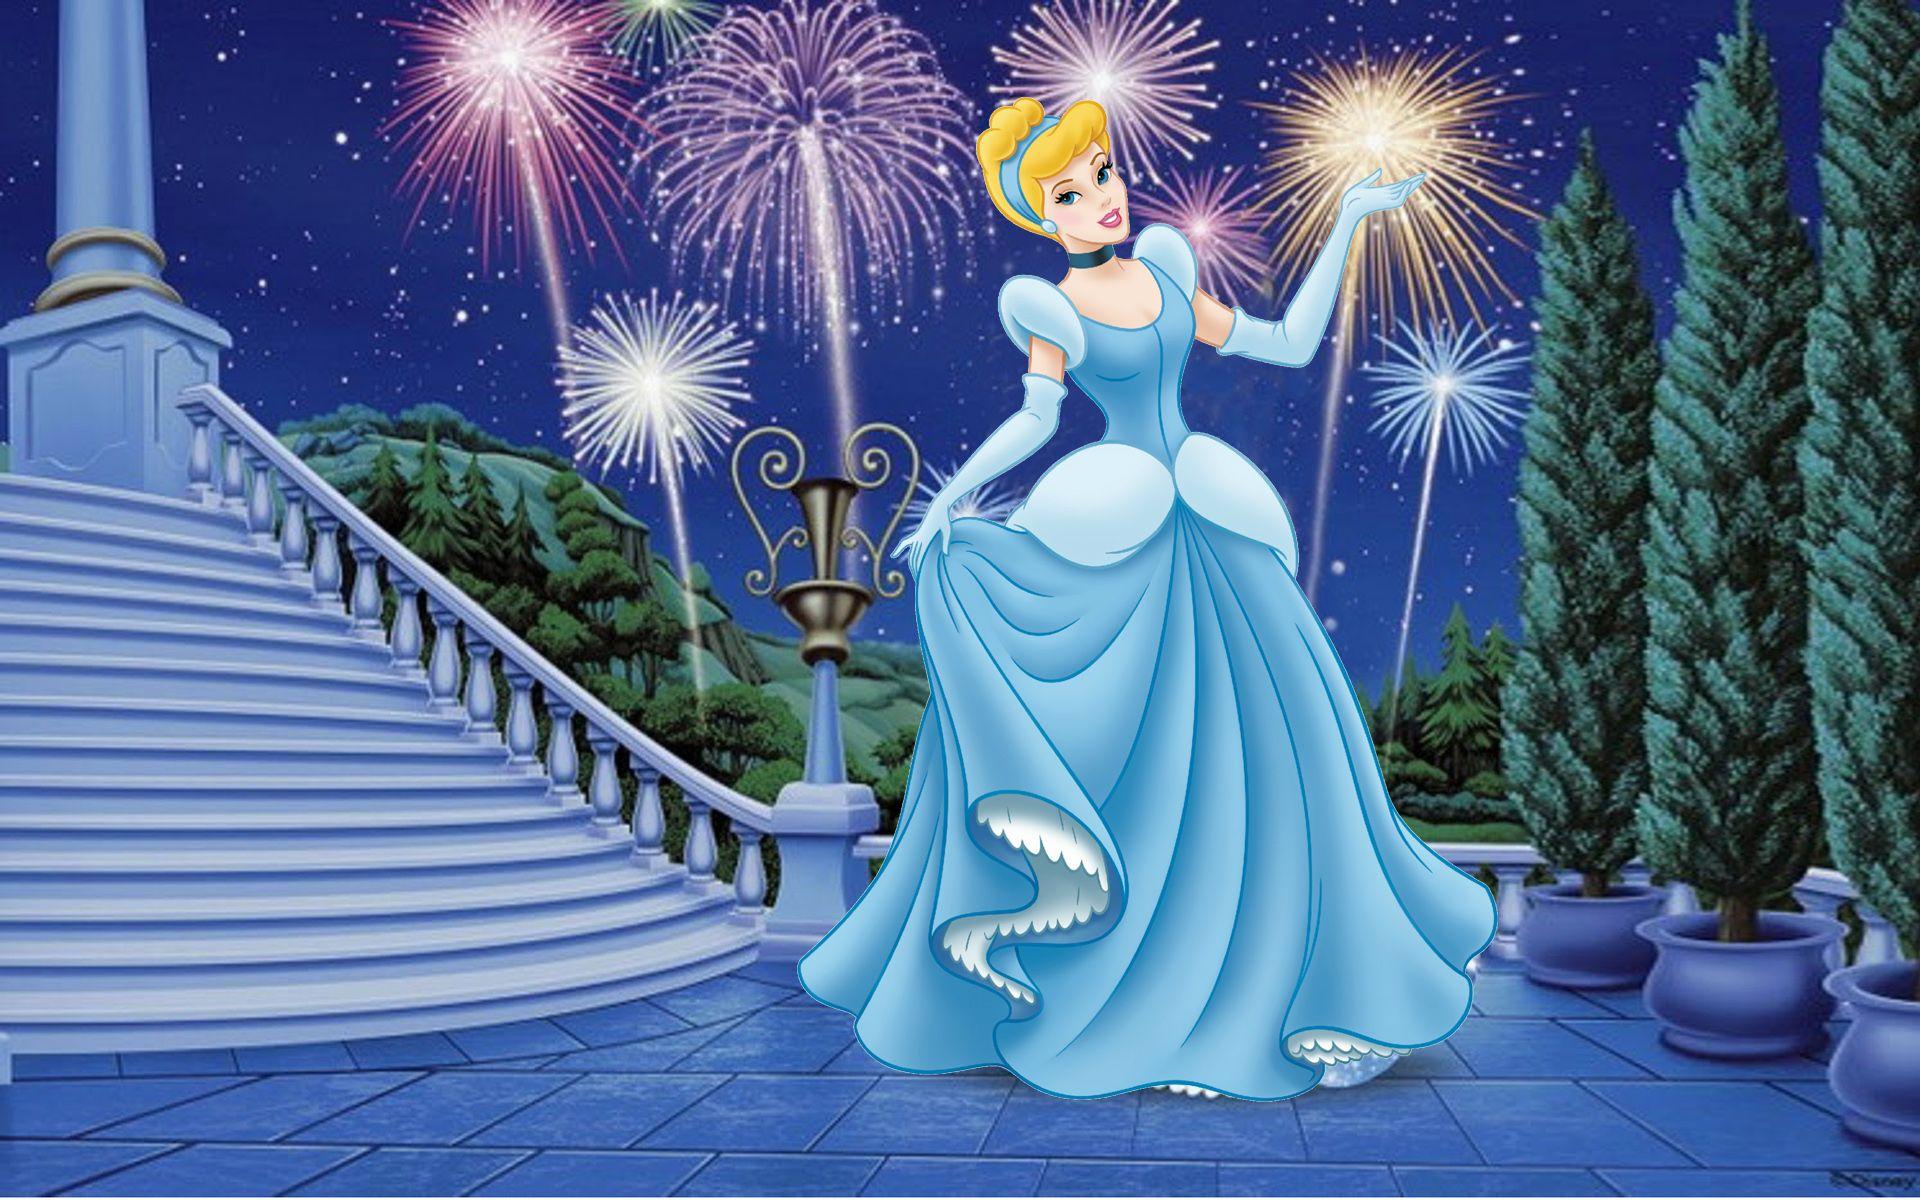 Disney Princess Cinderella Wallpapers Hd Wallpaper Cave Images and